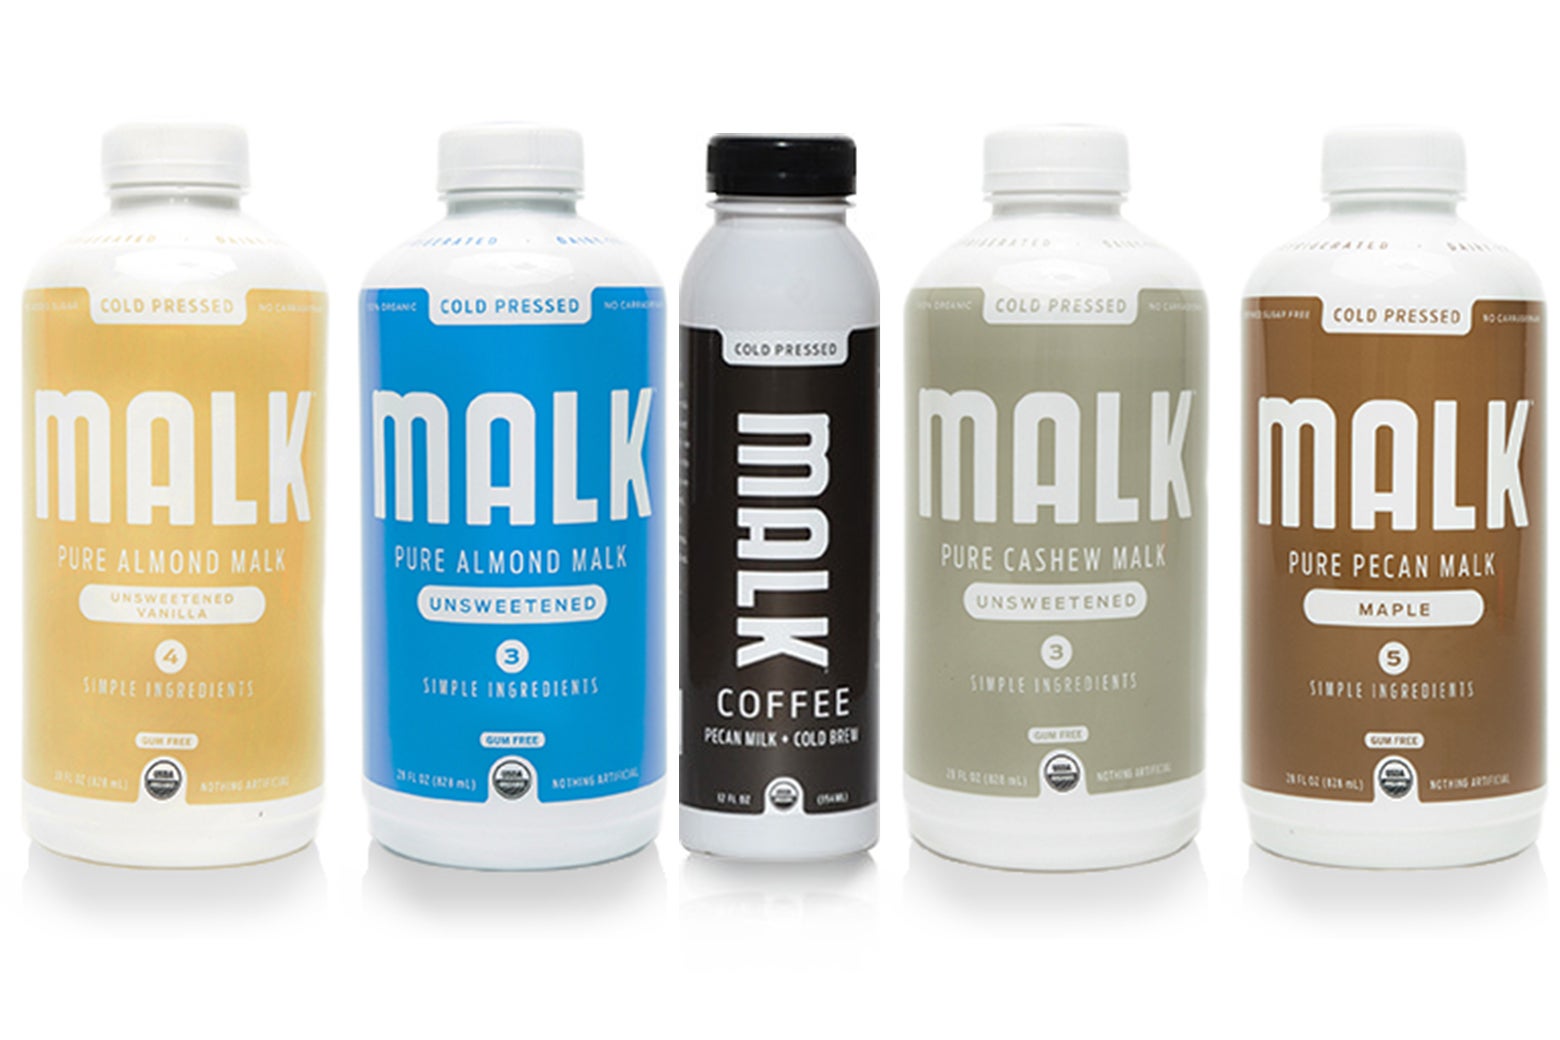 Five different varieties of Malk brand beverages.